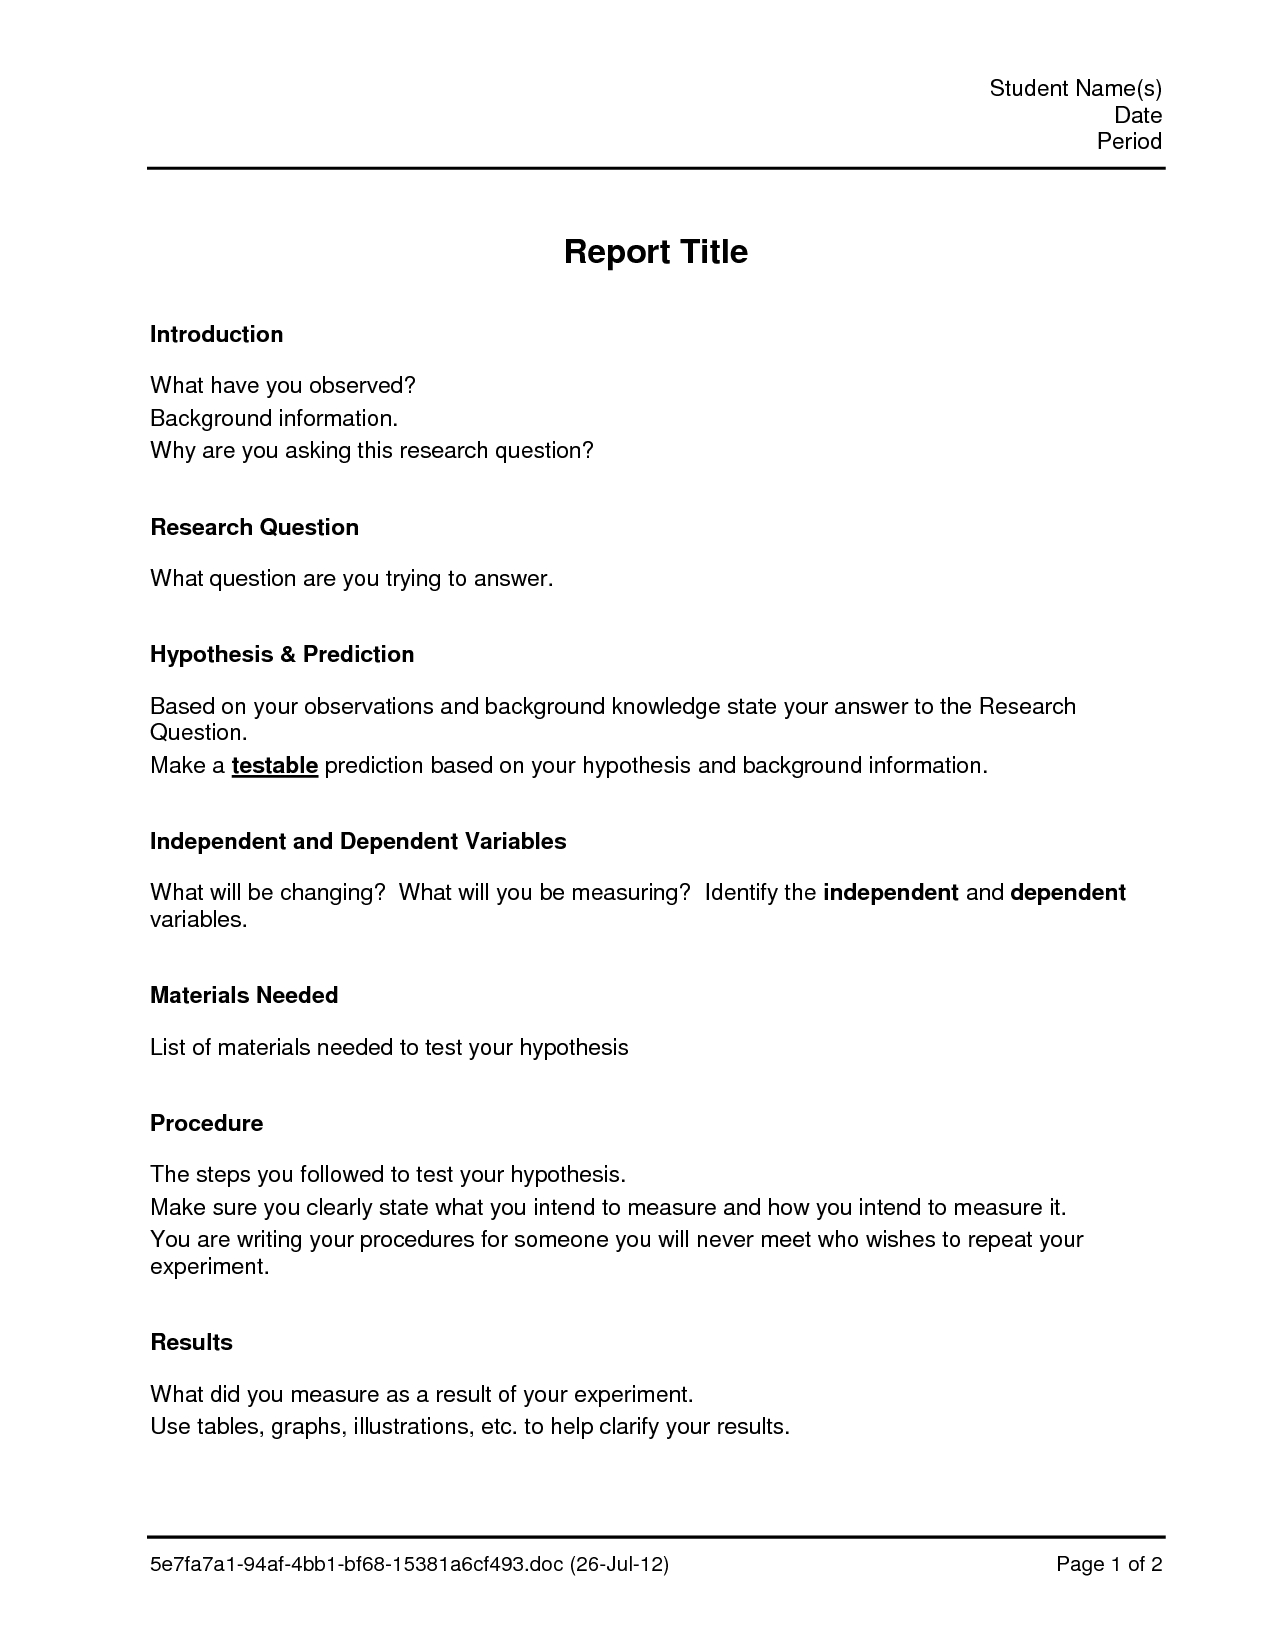 Lab Report Template | E Commercewordpress Regarding Lab Report Template Word